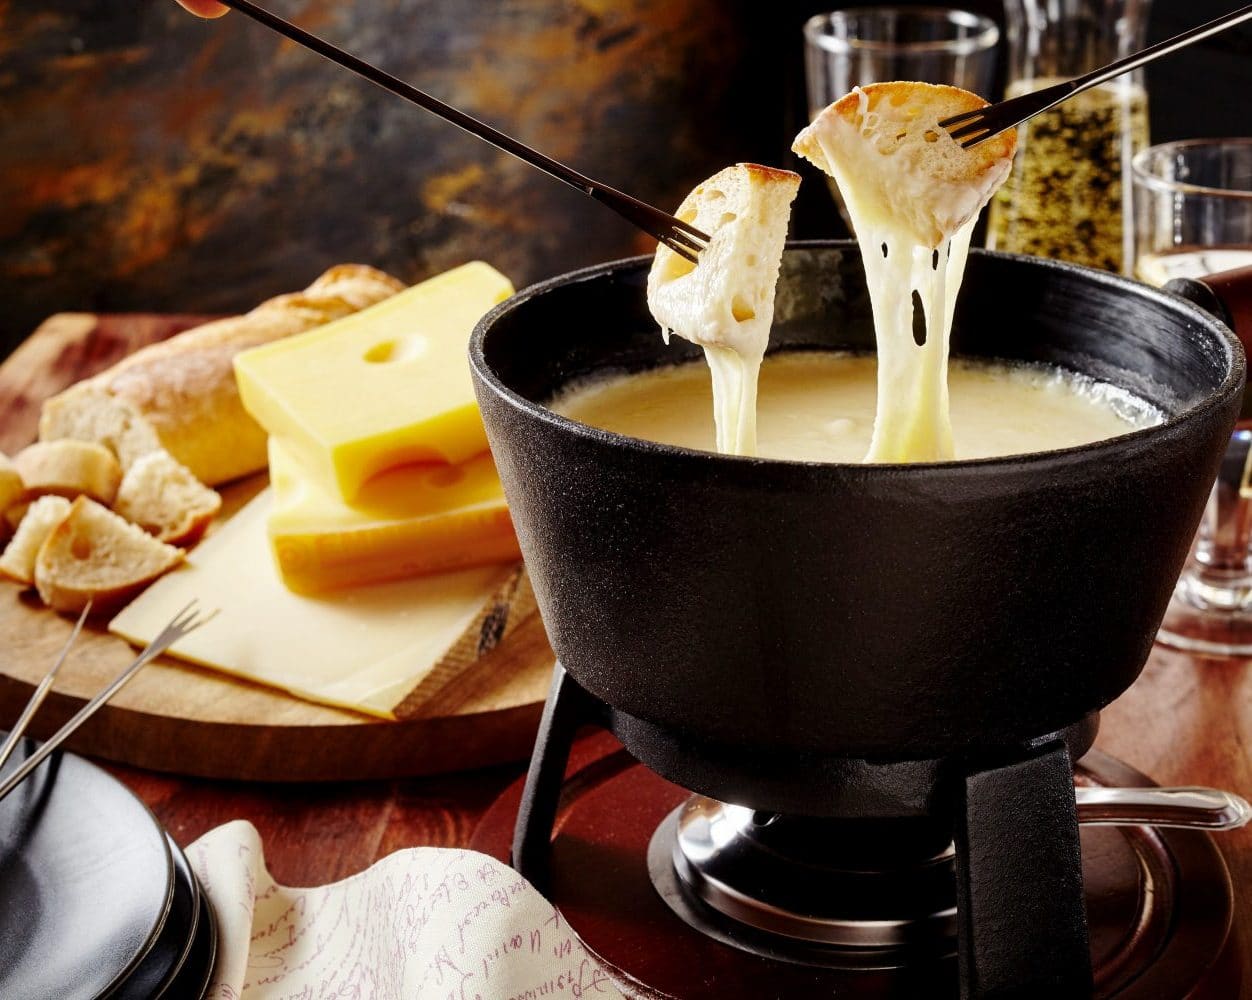 Classic cheese fondue